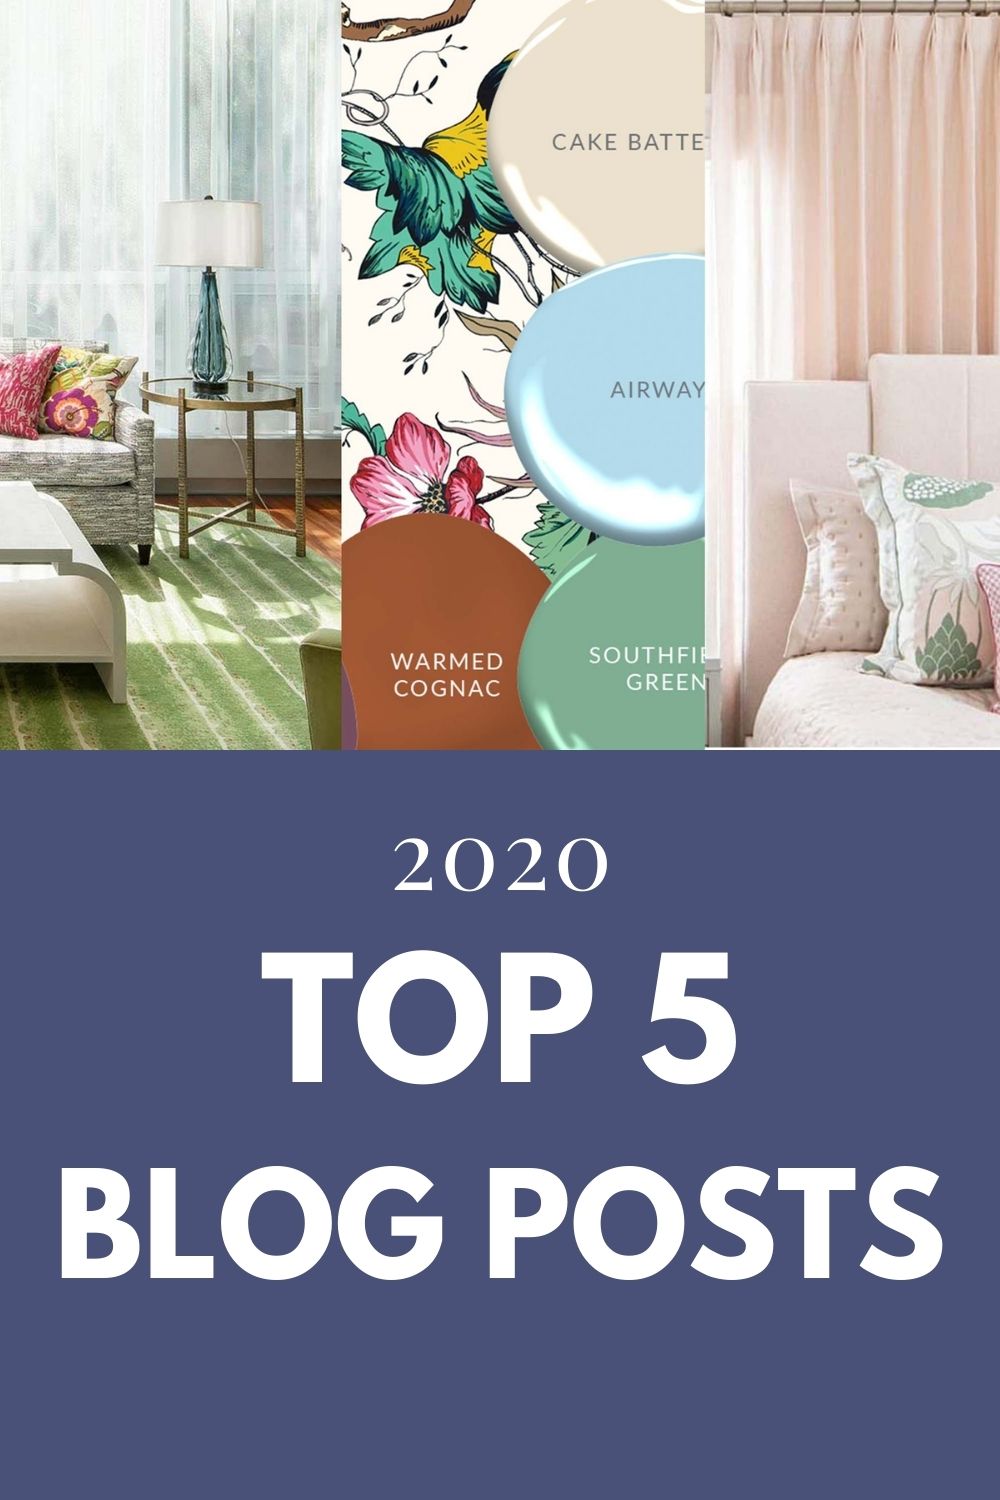 Top 5 Blog Posts of 2020